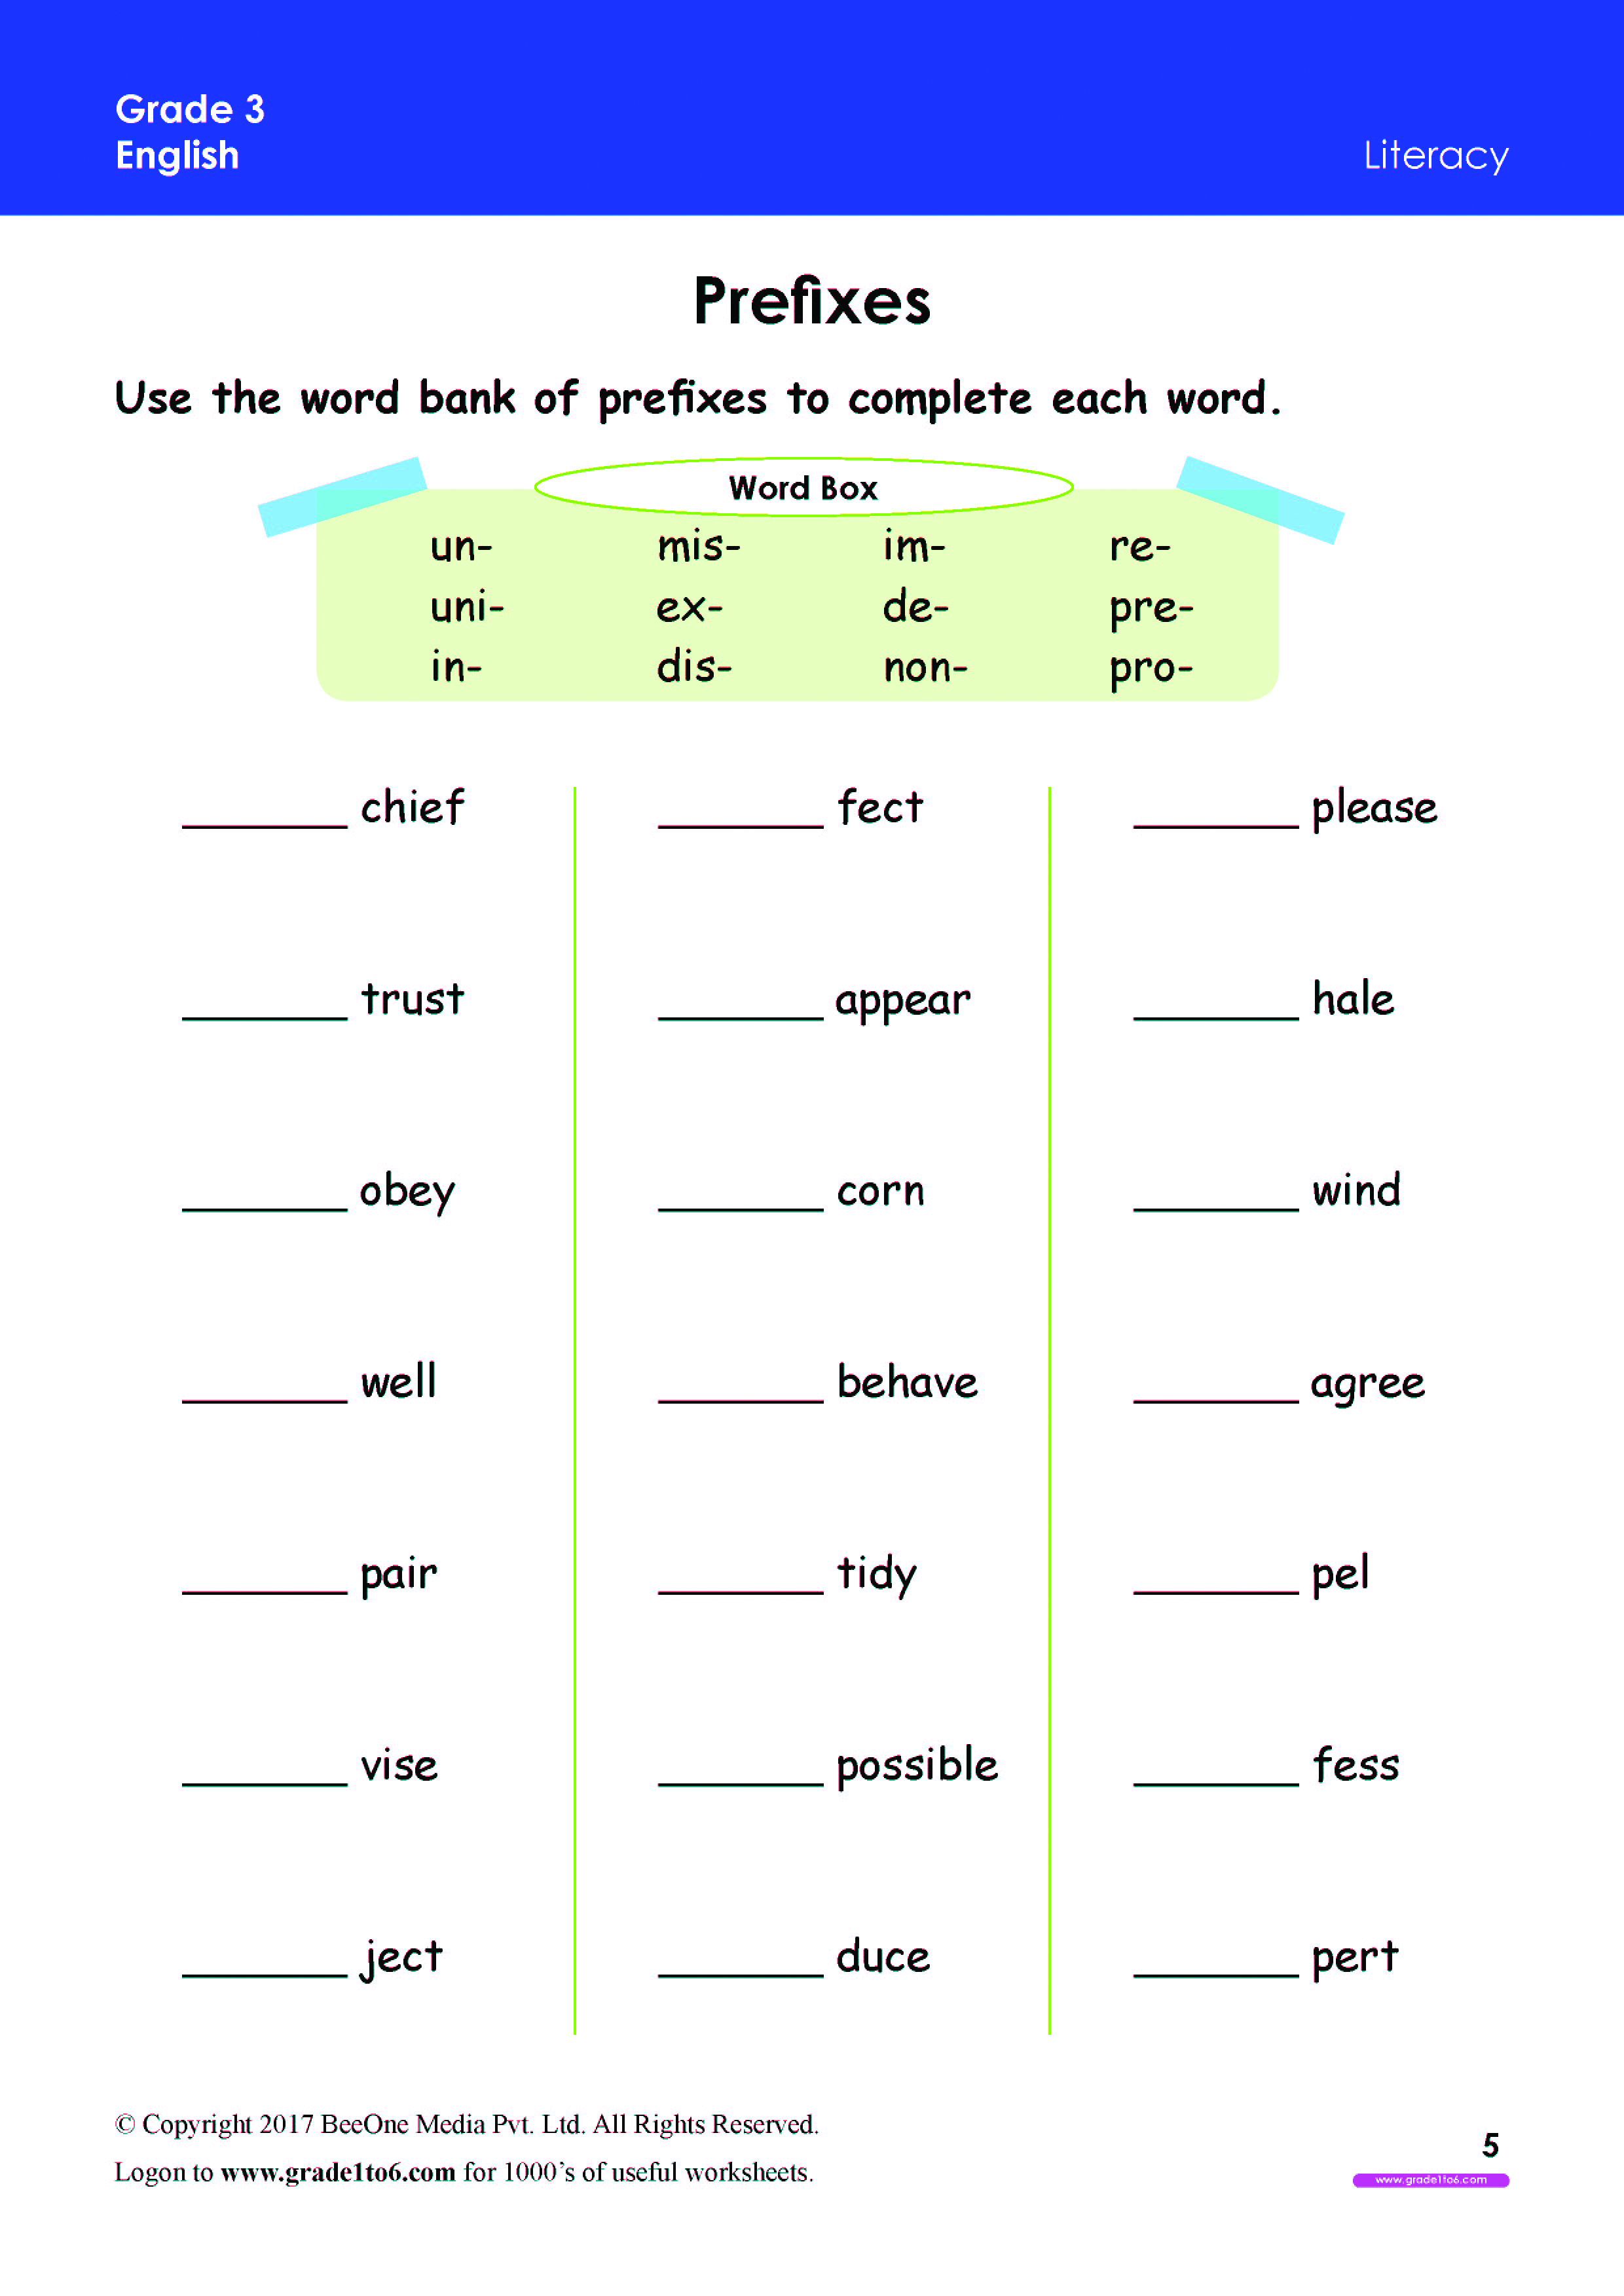 prefix-worksheets-grade-3-www-grade1to6